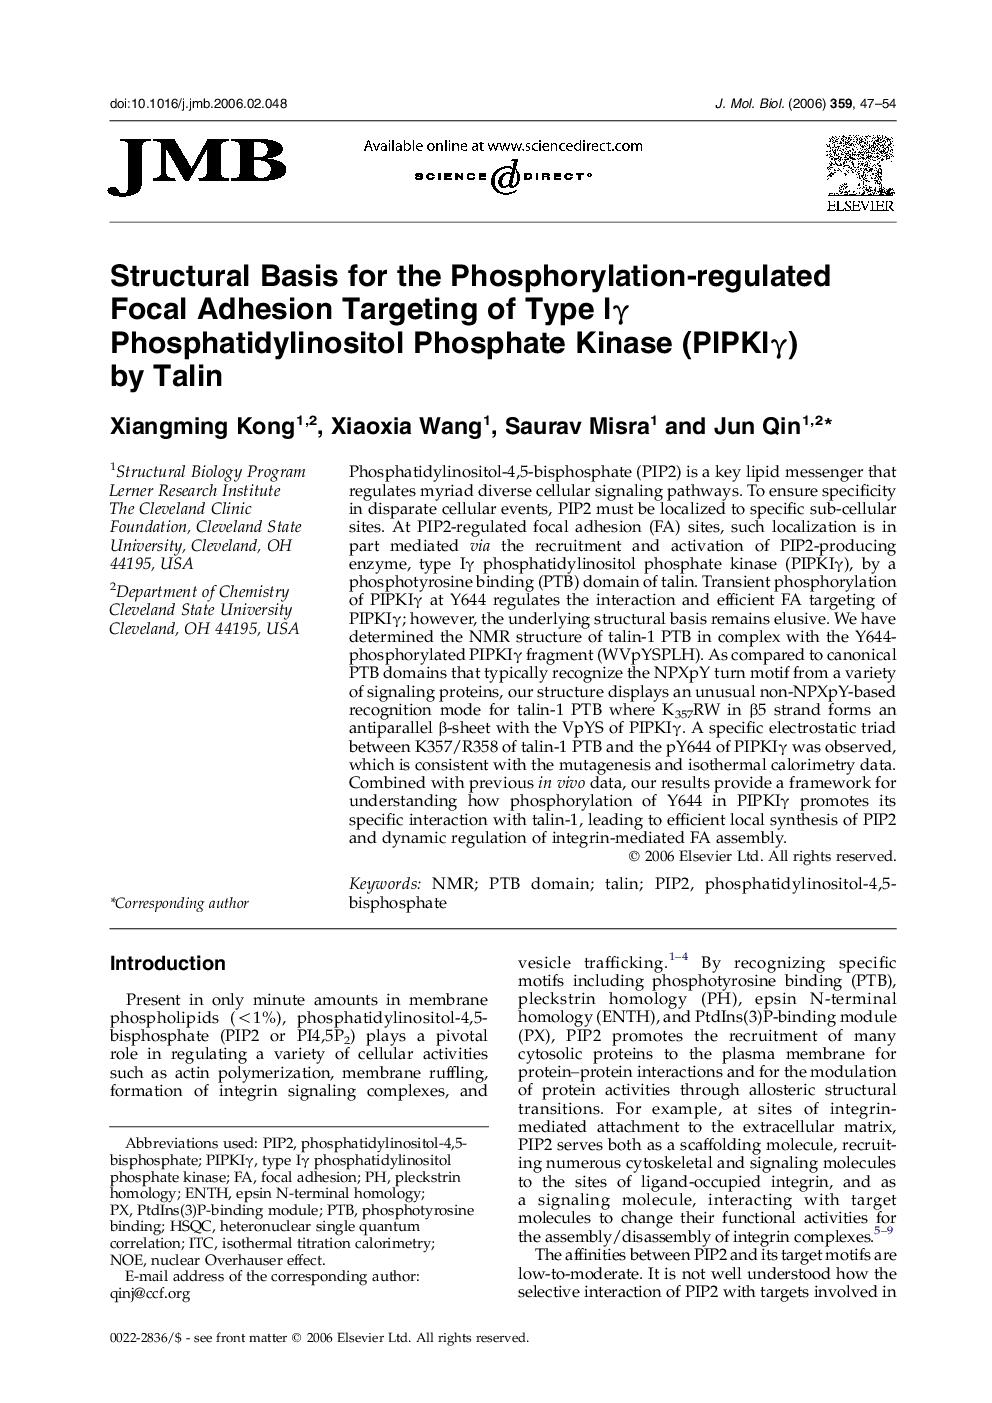 Structural Basis for the Phosphorylation-regulated Focal Adhesion Targeting of Type Iγ Phosphatidylinositol Phosphate Kinase (PIPKIγ) by Talin